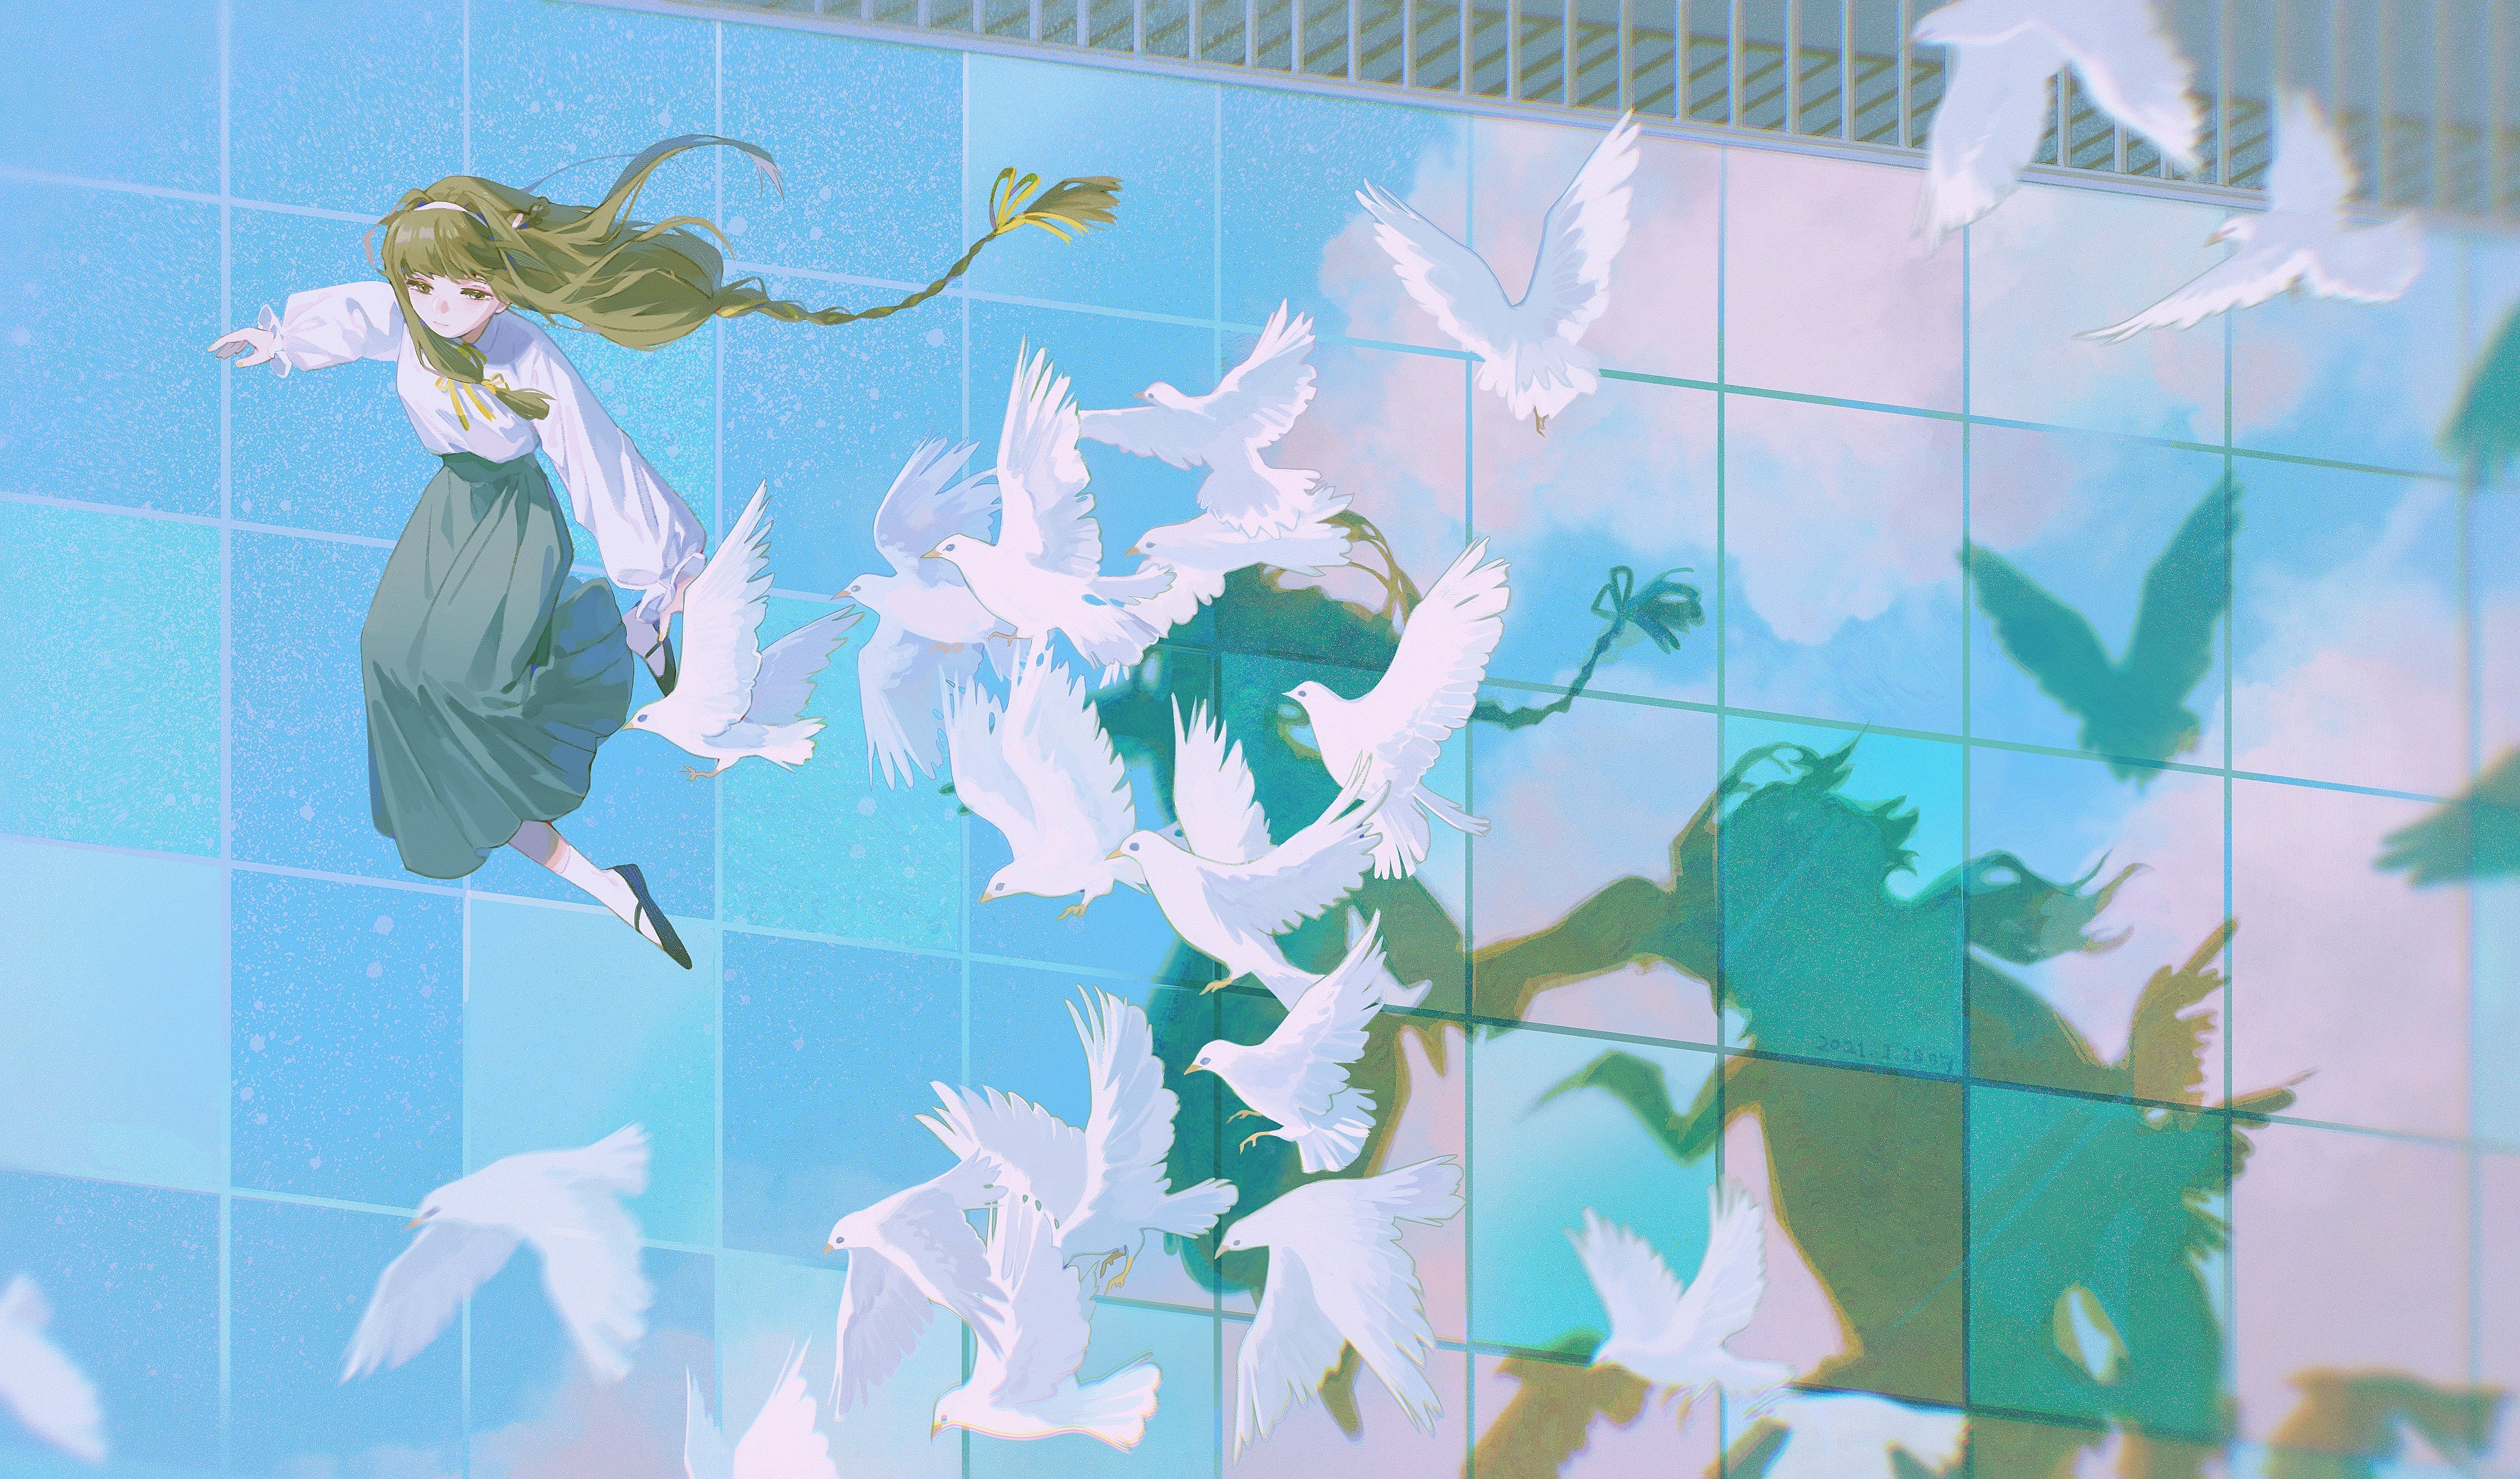 Anime 3782x2220 anime anime girls pigeons long hair jumping looking away dress clouds tiles brunette white shirt cyan